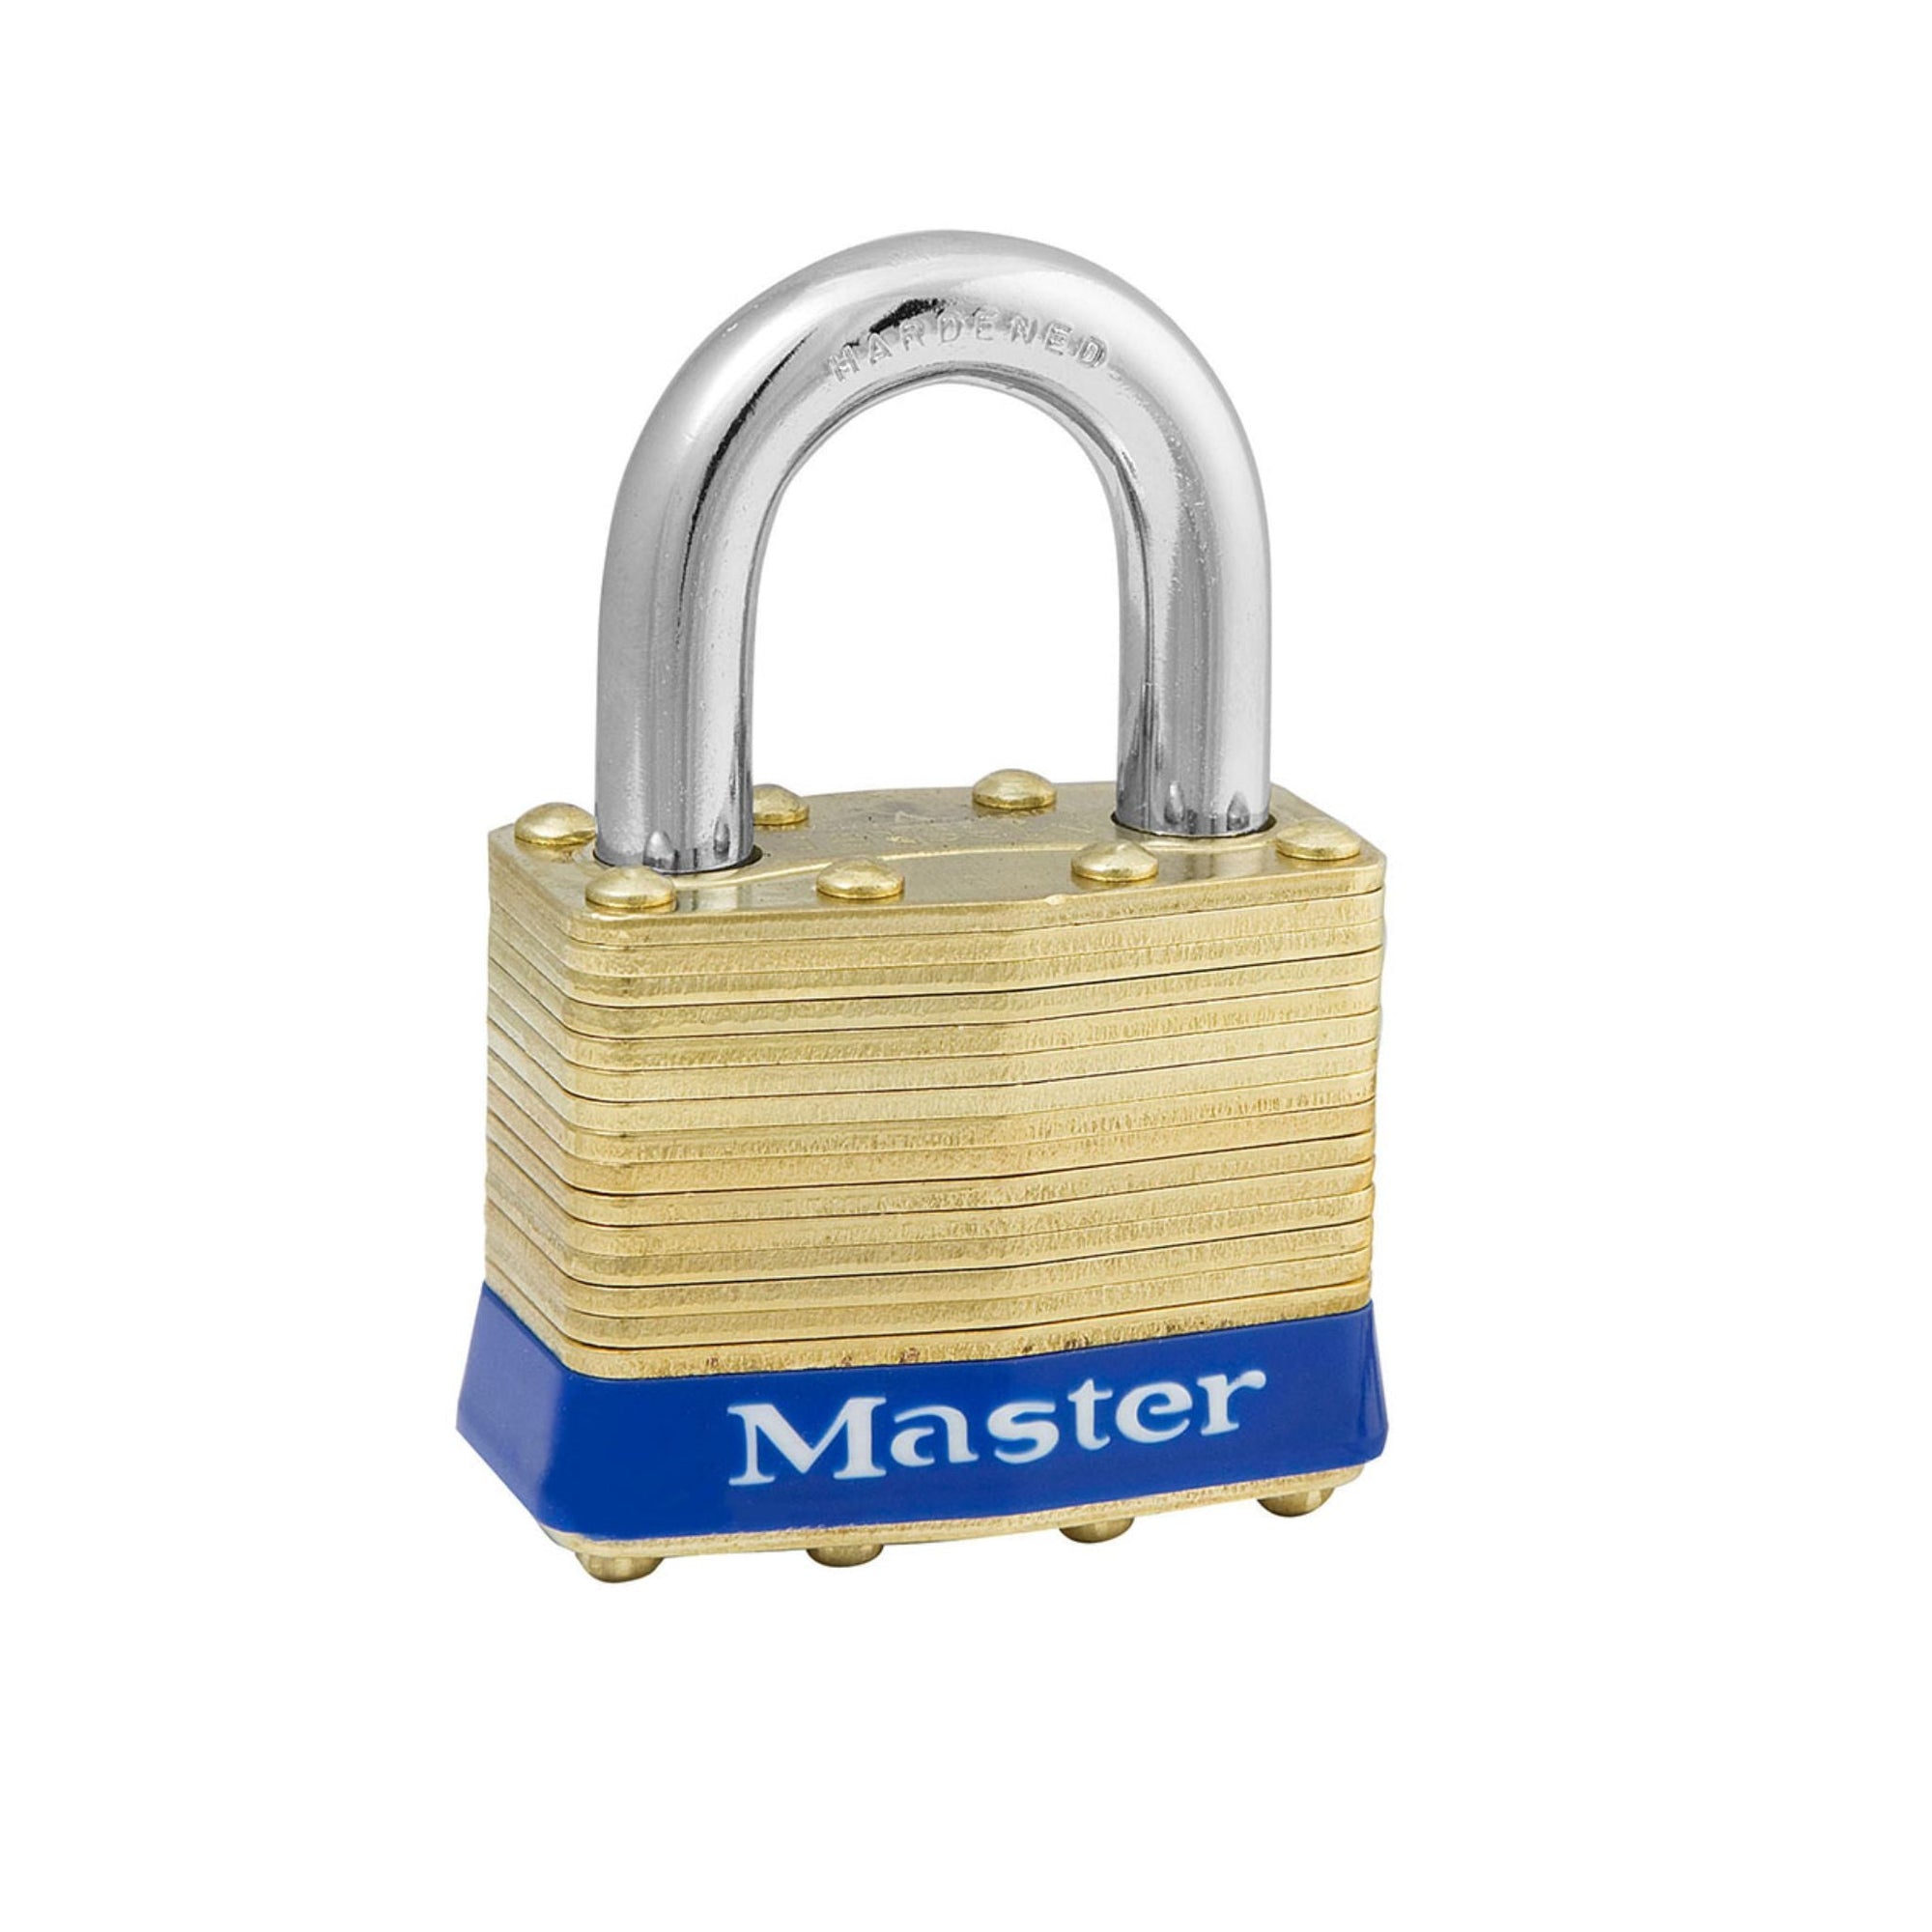 Master Lock 2KA 0302 Lock Laminated brass No. 2 Series Padlock Keyed to Match Existing Key Number KA0302 - The Lock Source